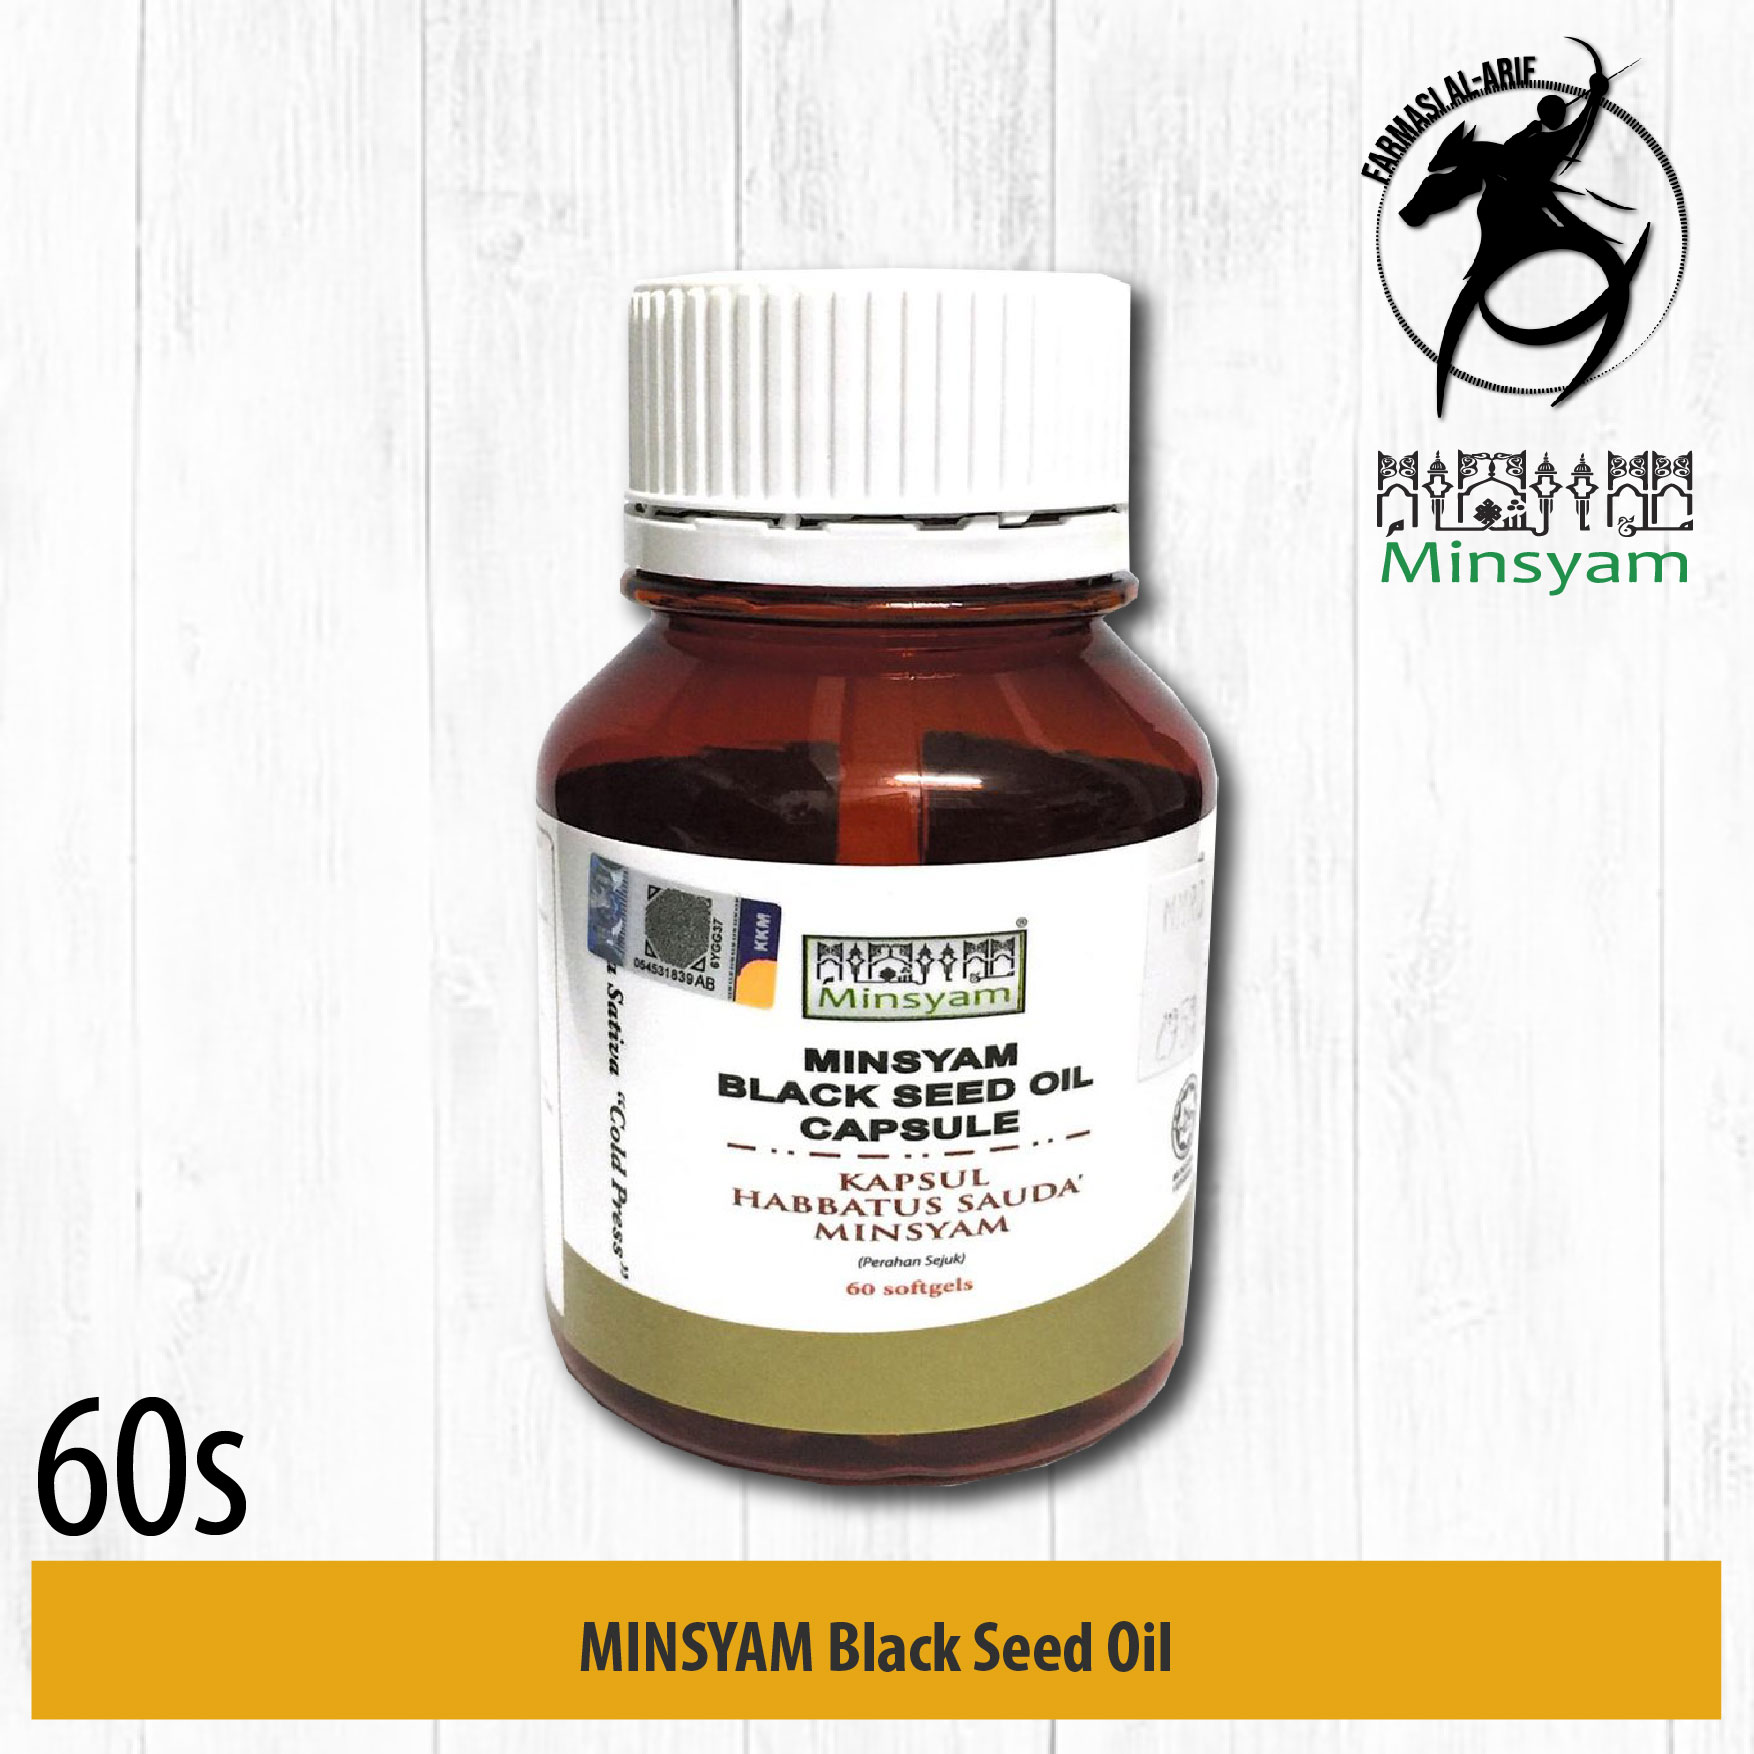 Black oil minsyam seed Minsyam black